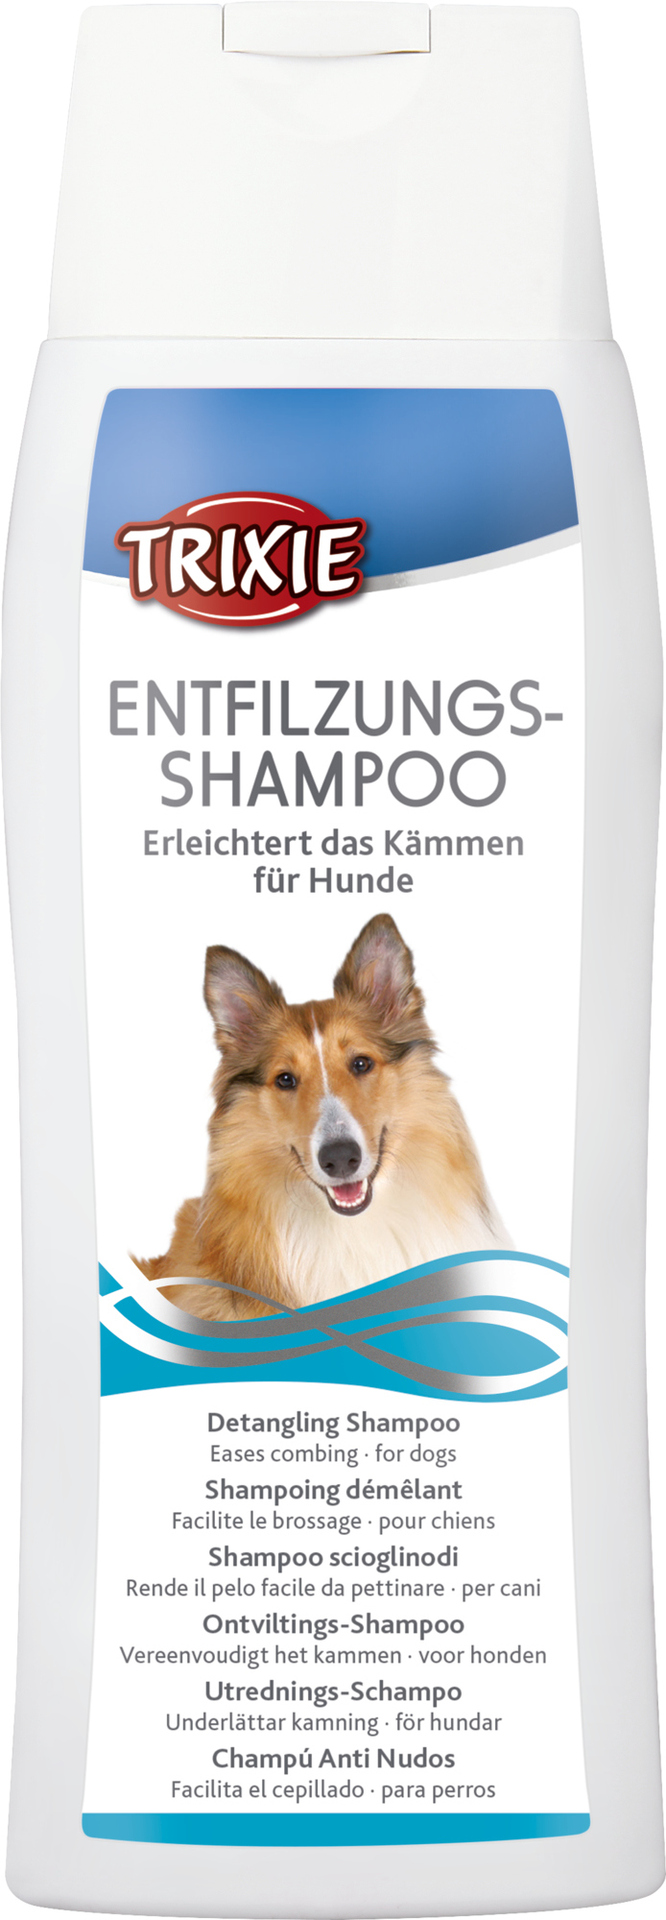 TRIXIE Entfilzungs-Shampoo